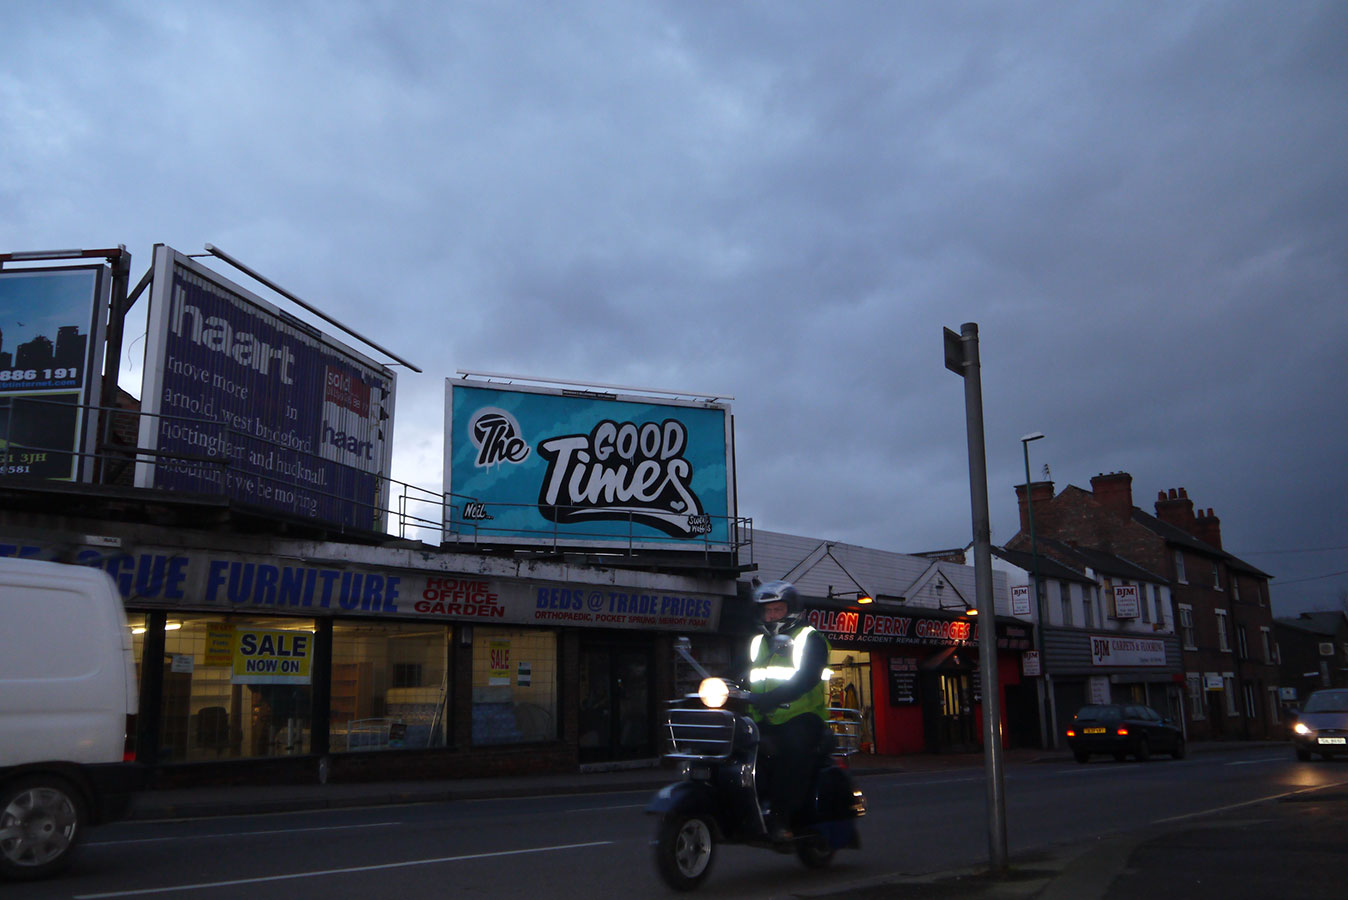  kid30 billboard nottingham ukingdom